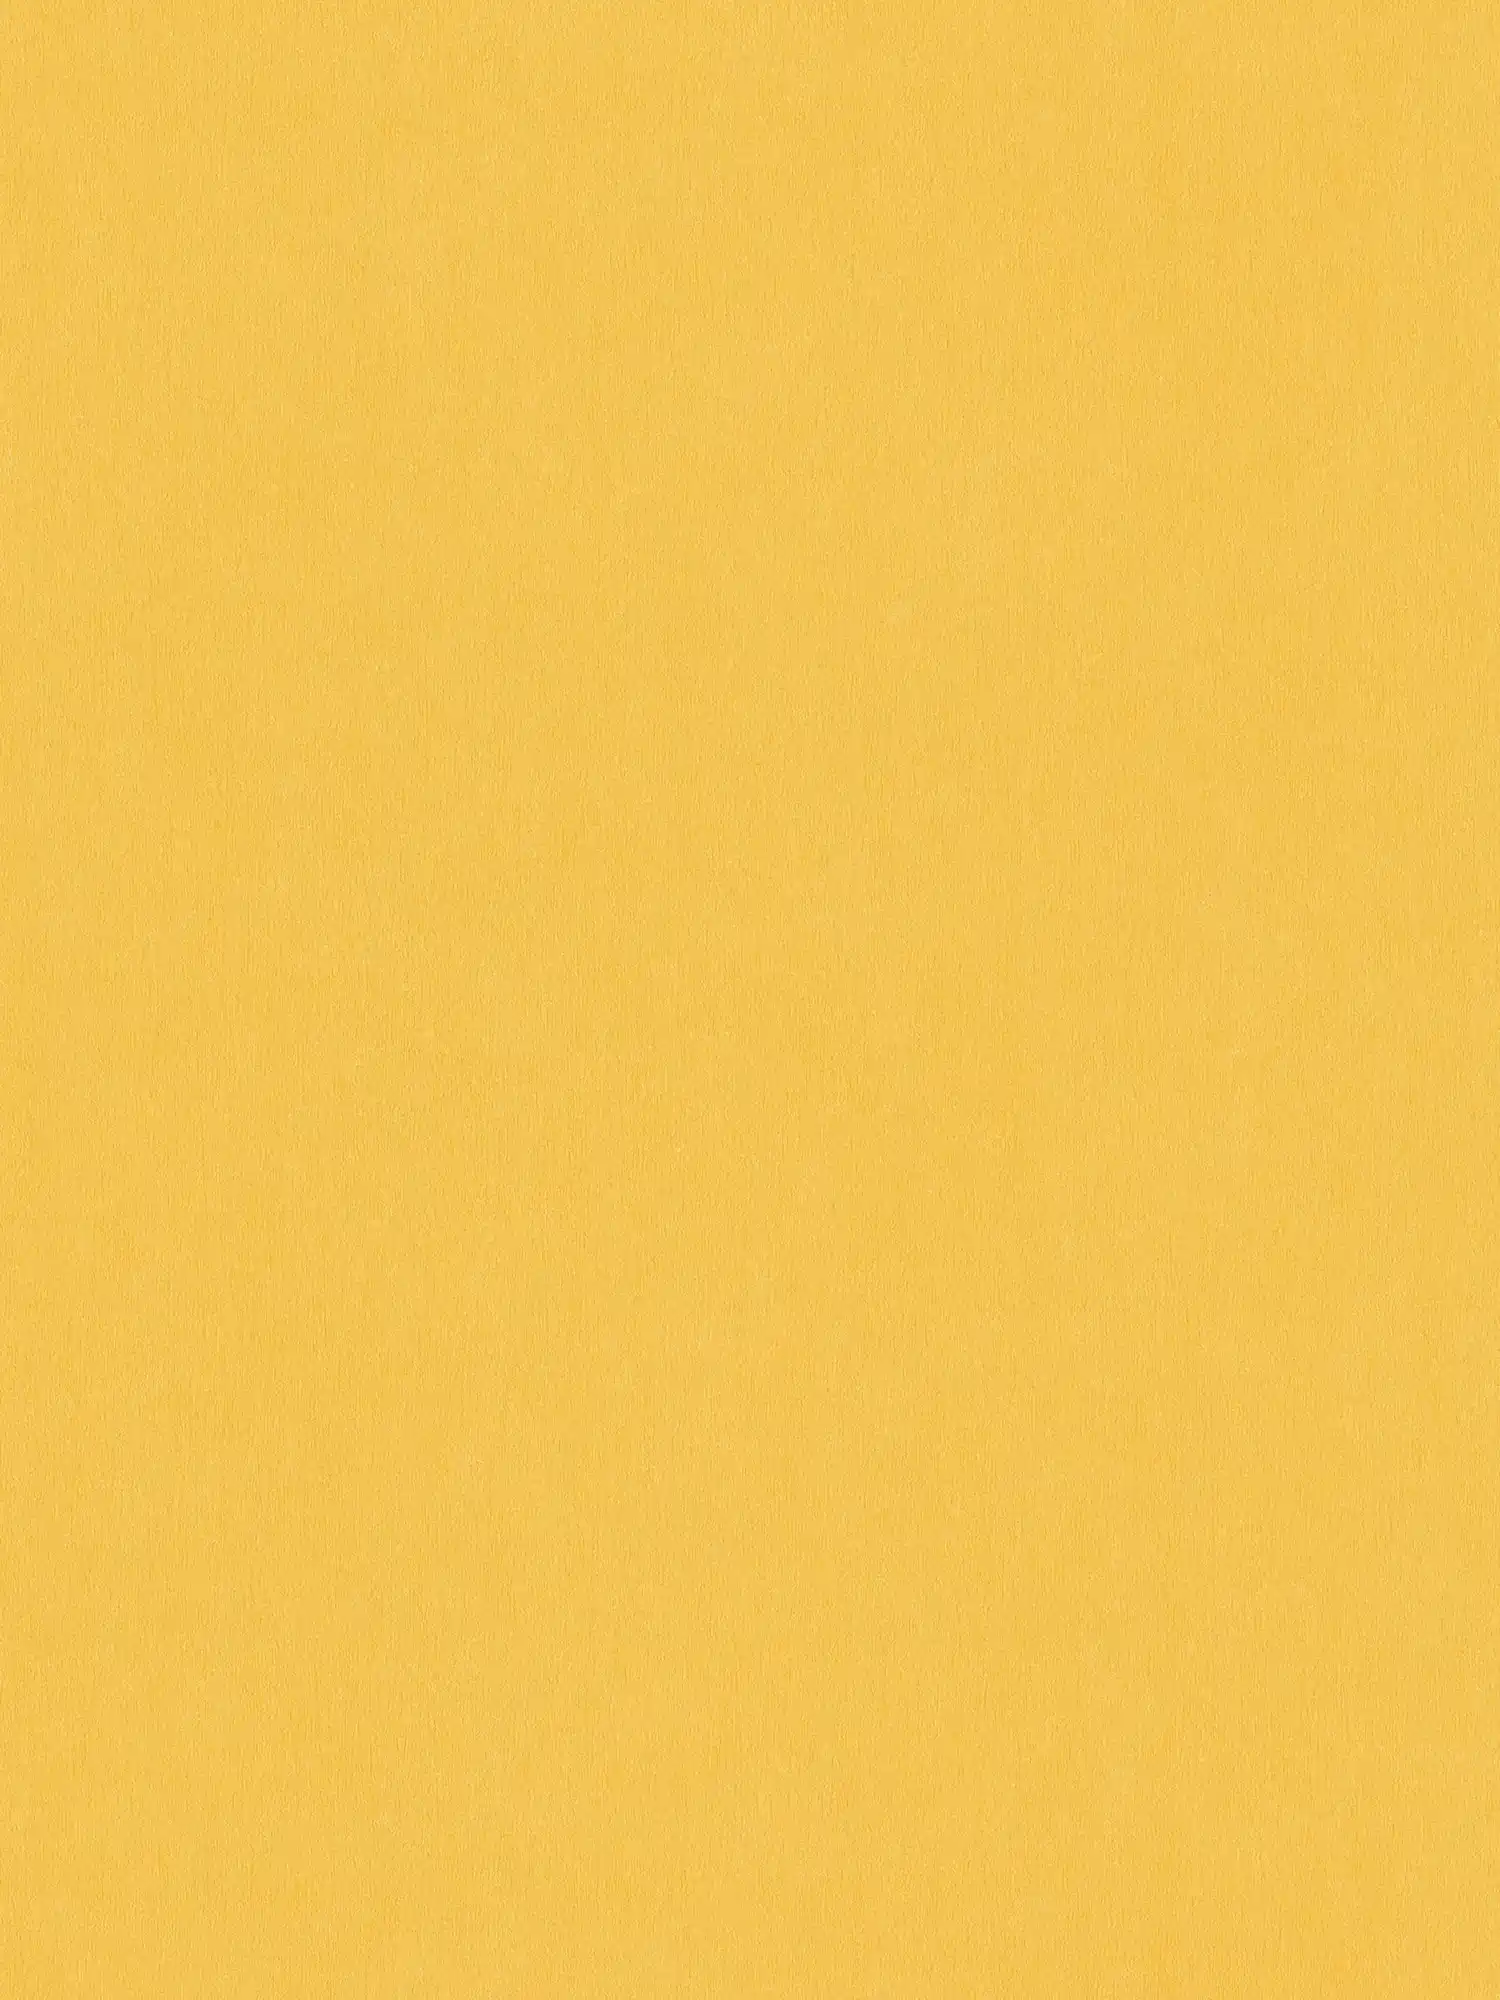 Mustard yellow wallpaper Nursery plain - yellow
